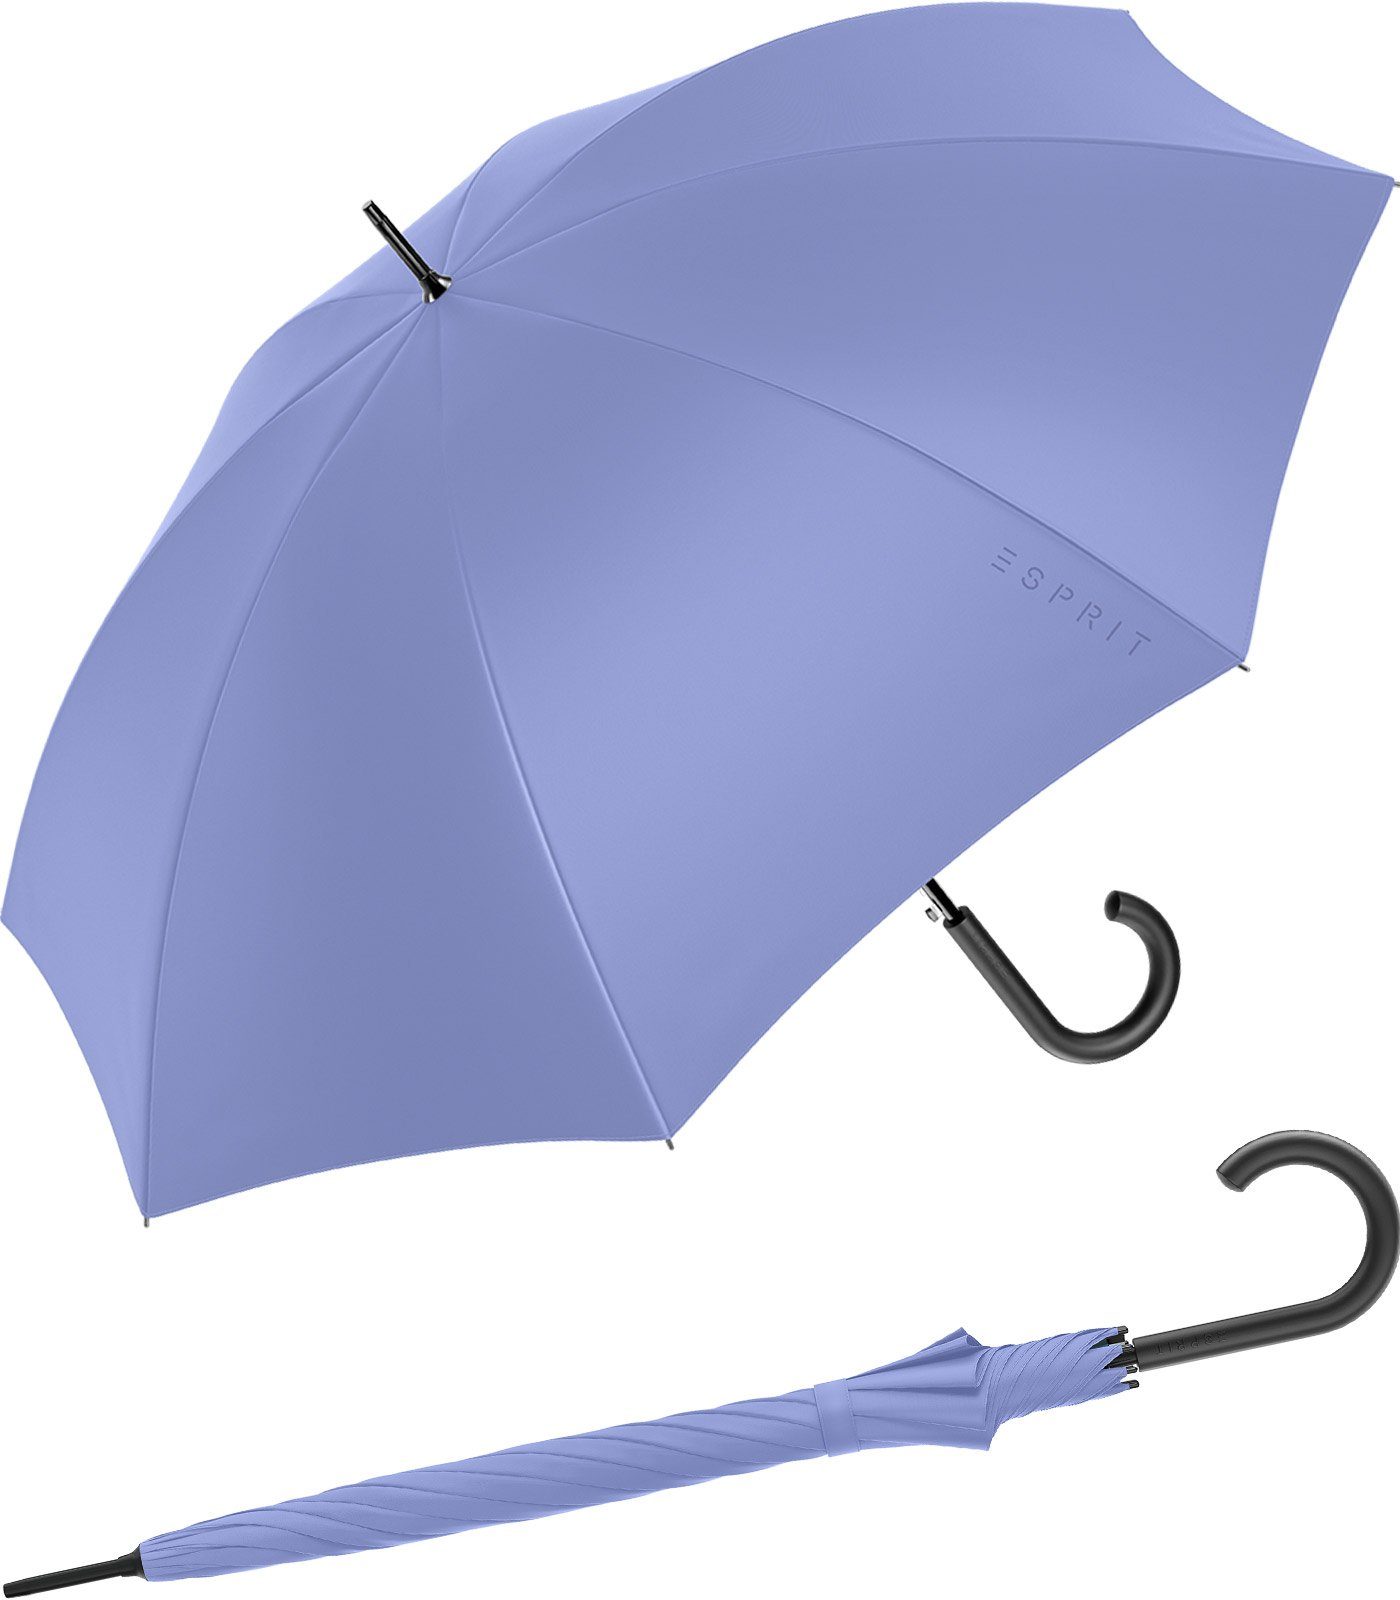 Esprit Langregenschirm Damen-Regenschirm mit Automatik FJ 2023, groß und stabil, in den Trendfarben lila